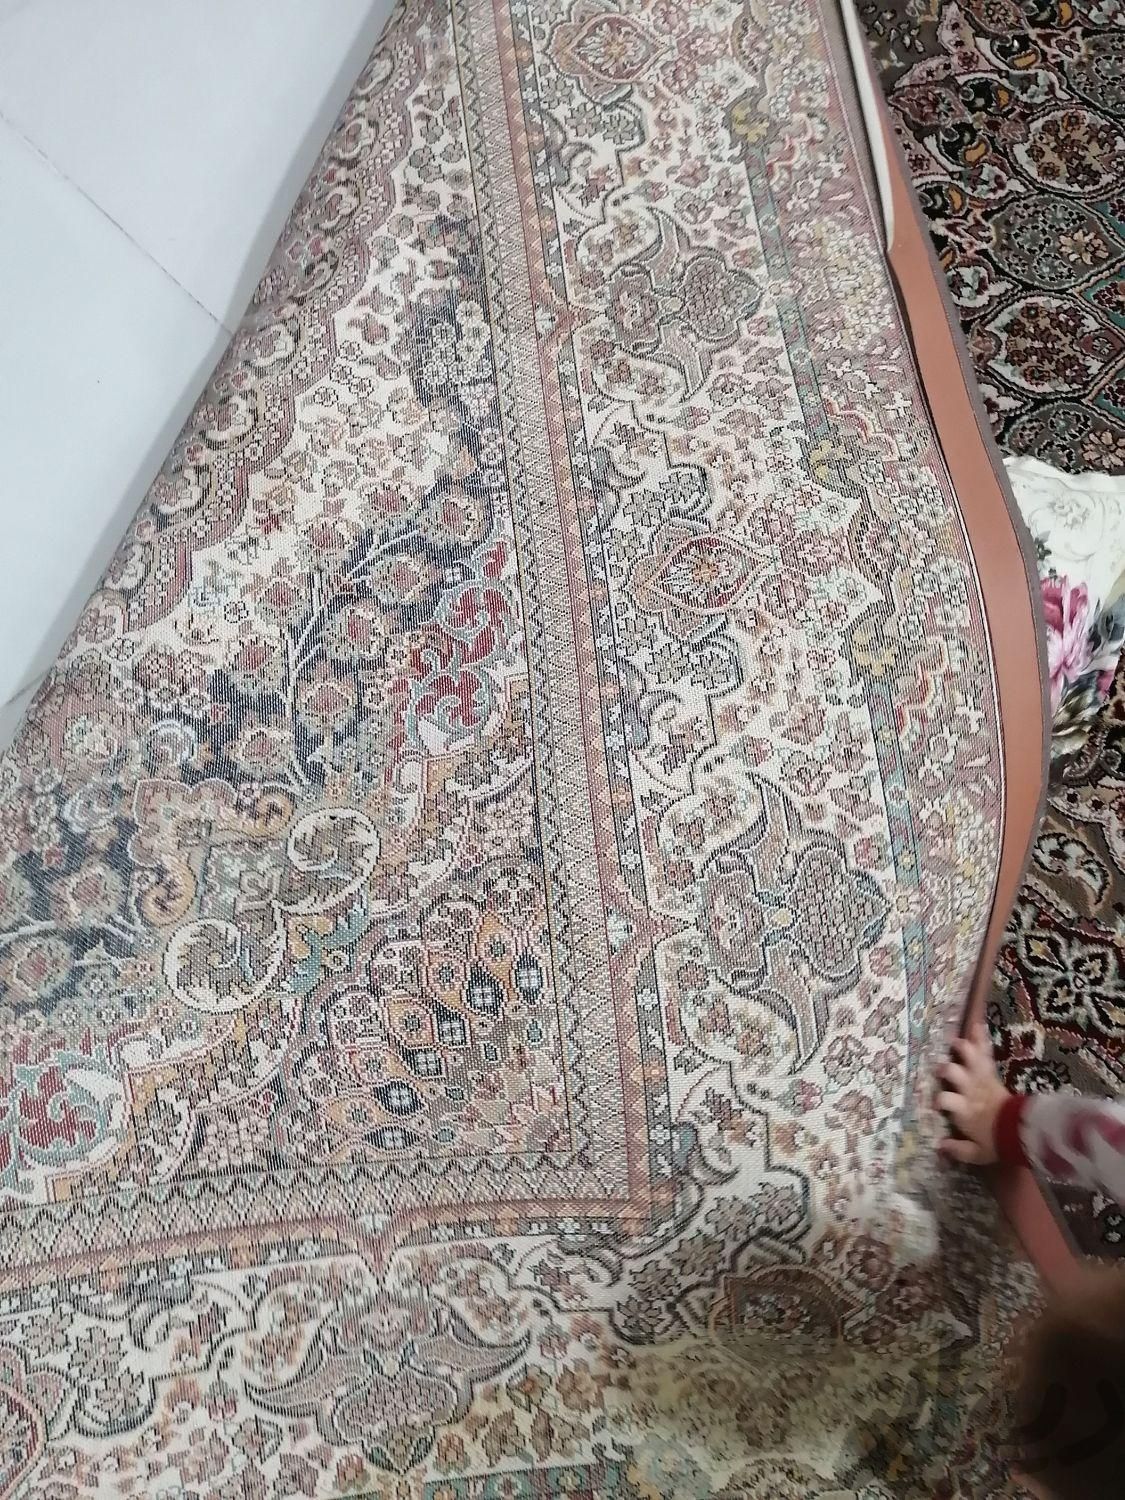 قالیچه تزیینی|فرش|مشهد, امیریه|دیوار